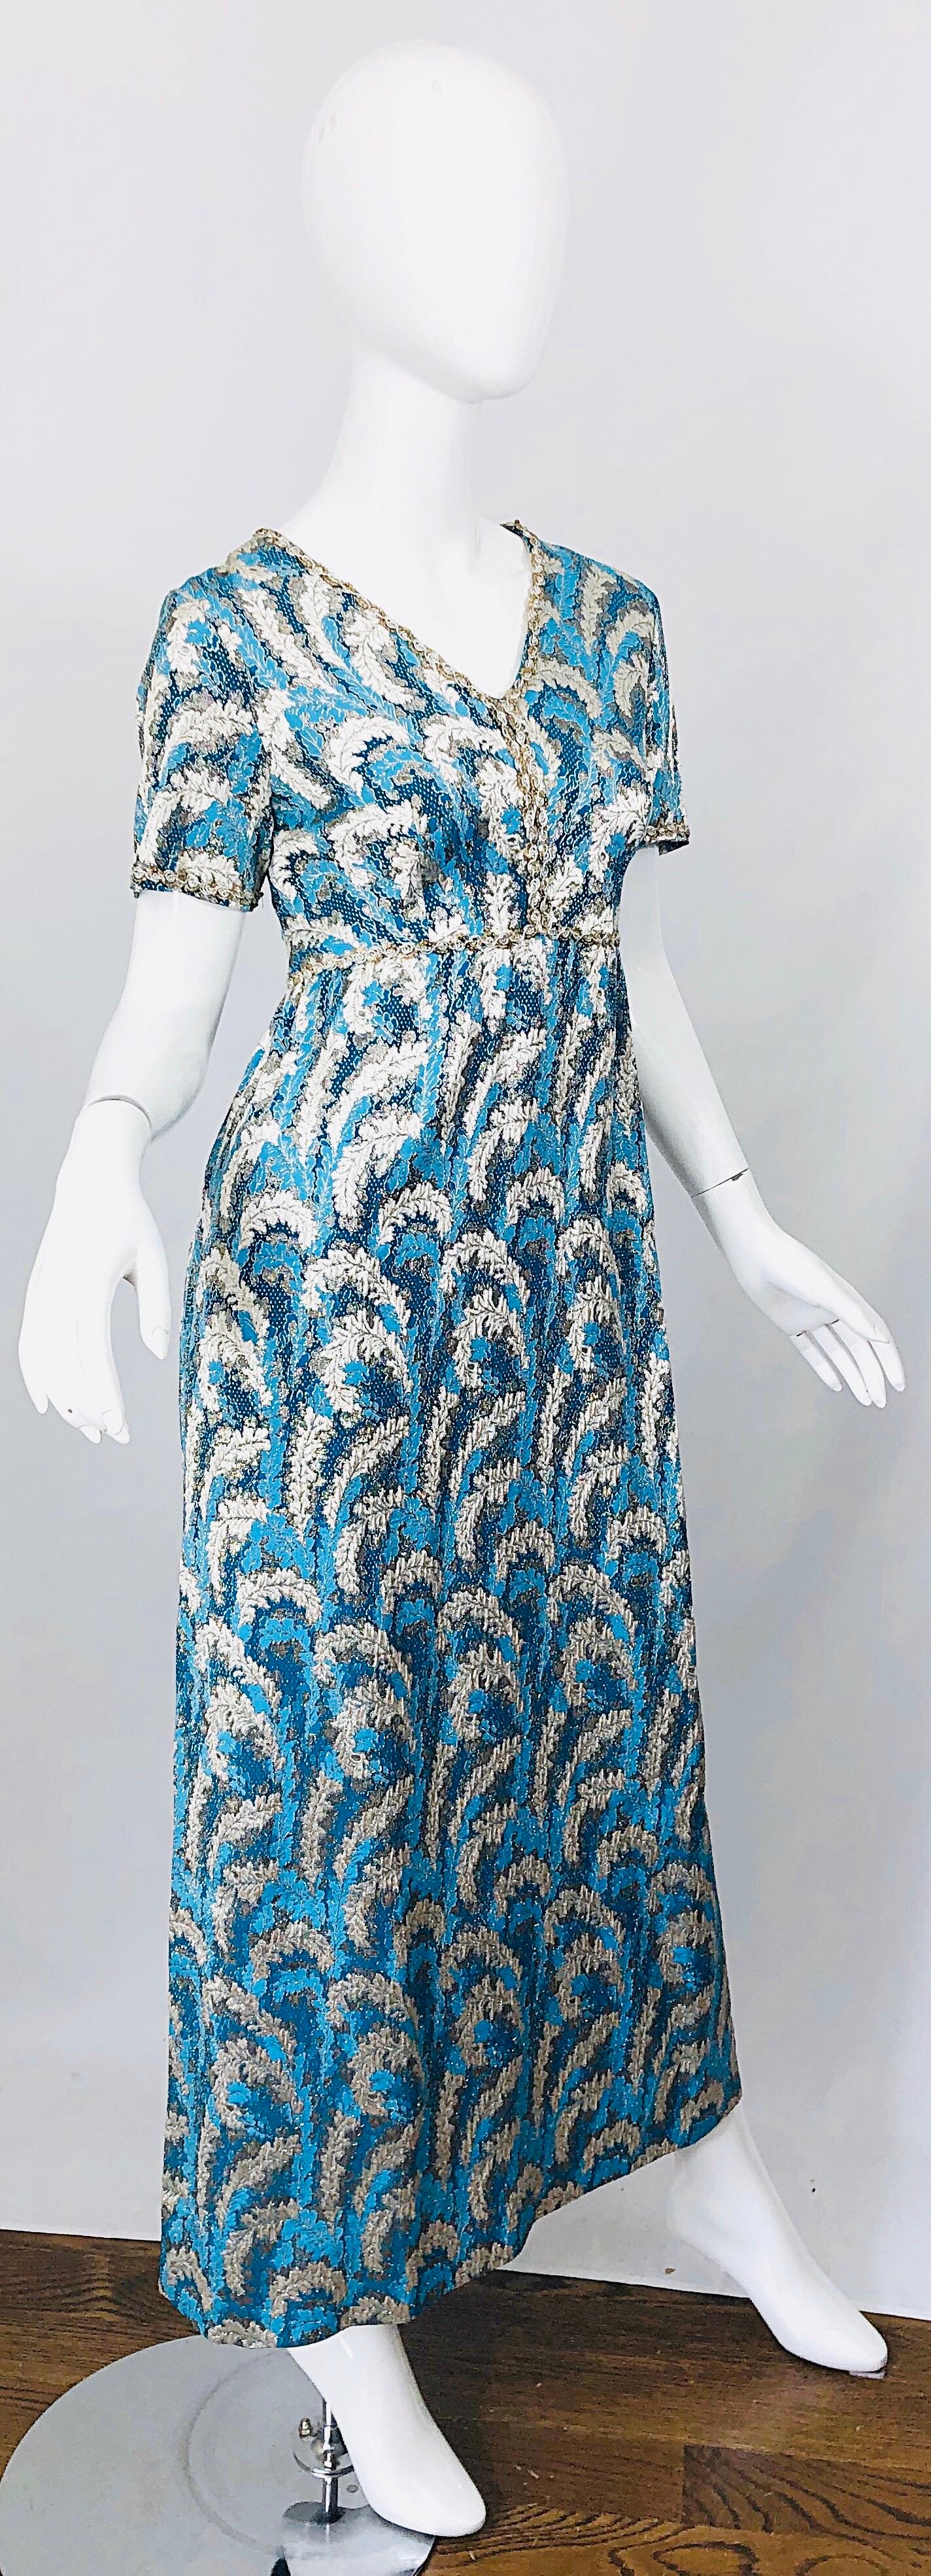 1960s Oscar de la Renta Turquoise Blue Silver Silk Brocade Sequin 60s Gown Dress For Sale 5